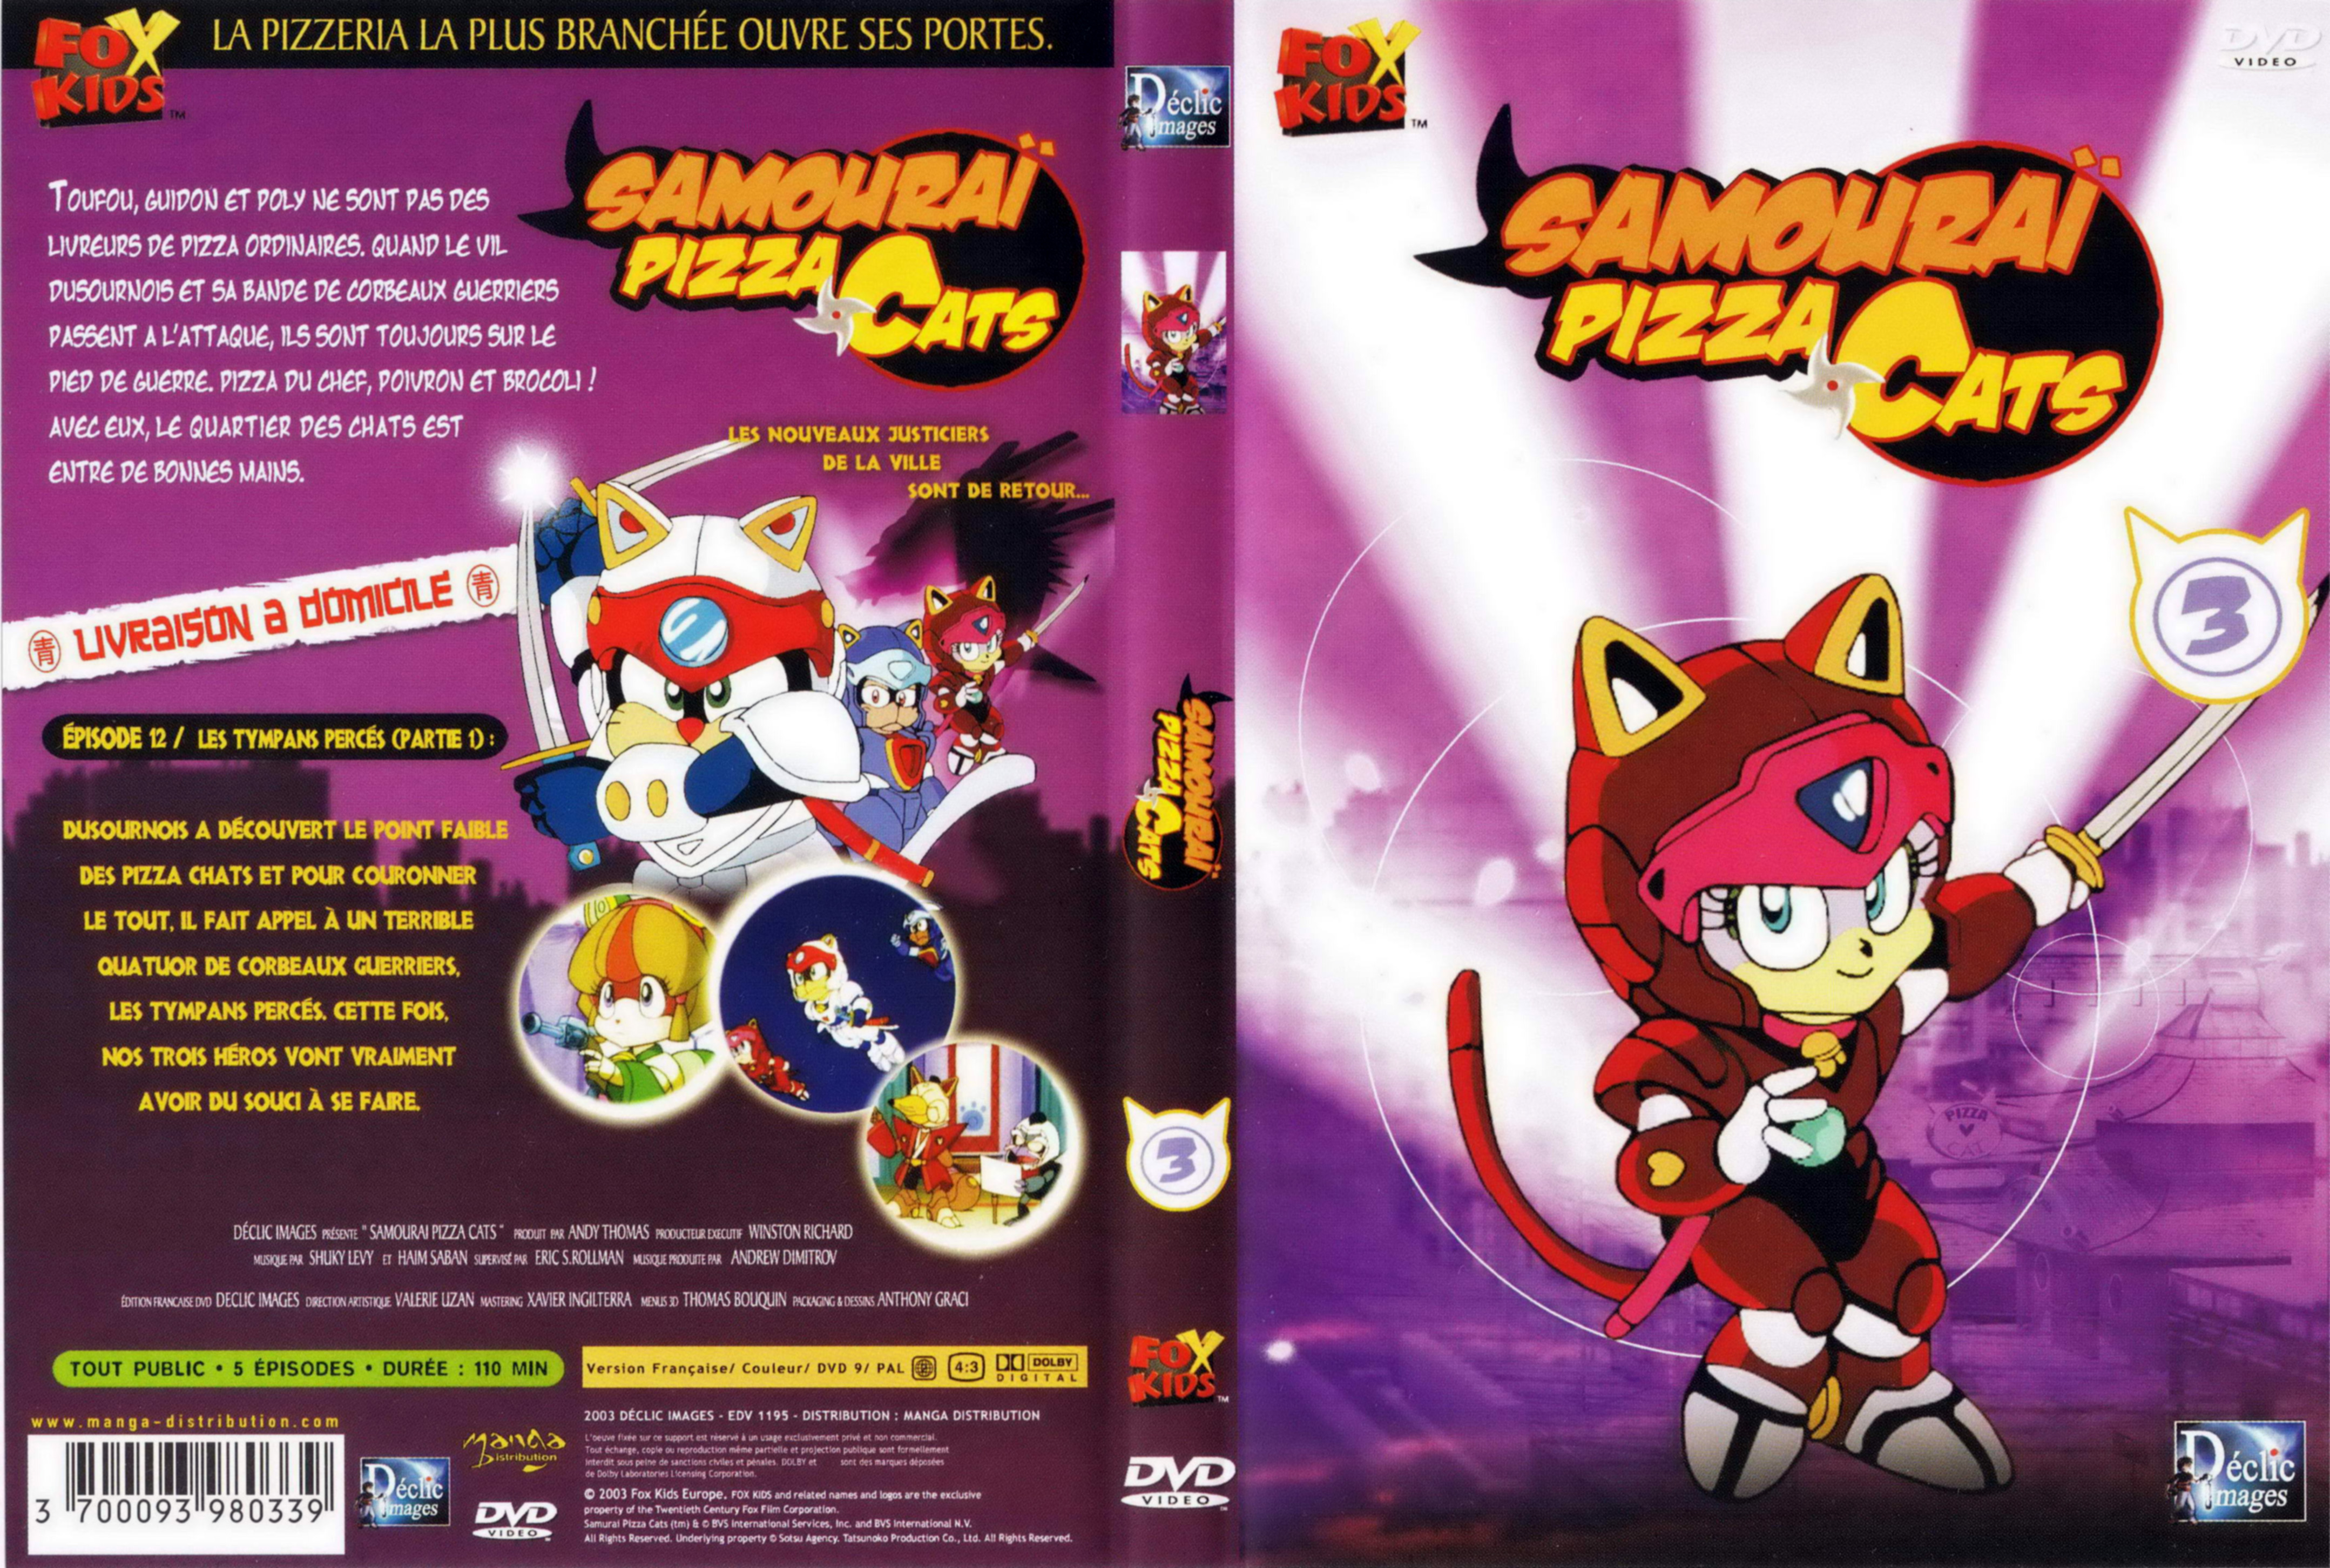 Jaquette DVD Samourai pizza cats dvd 3